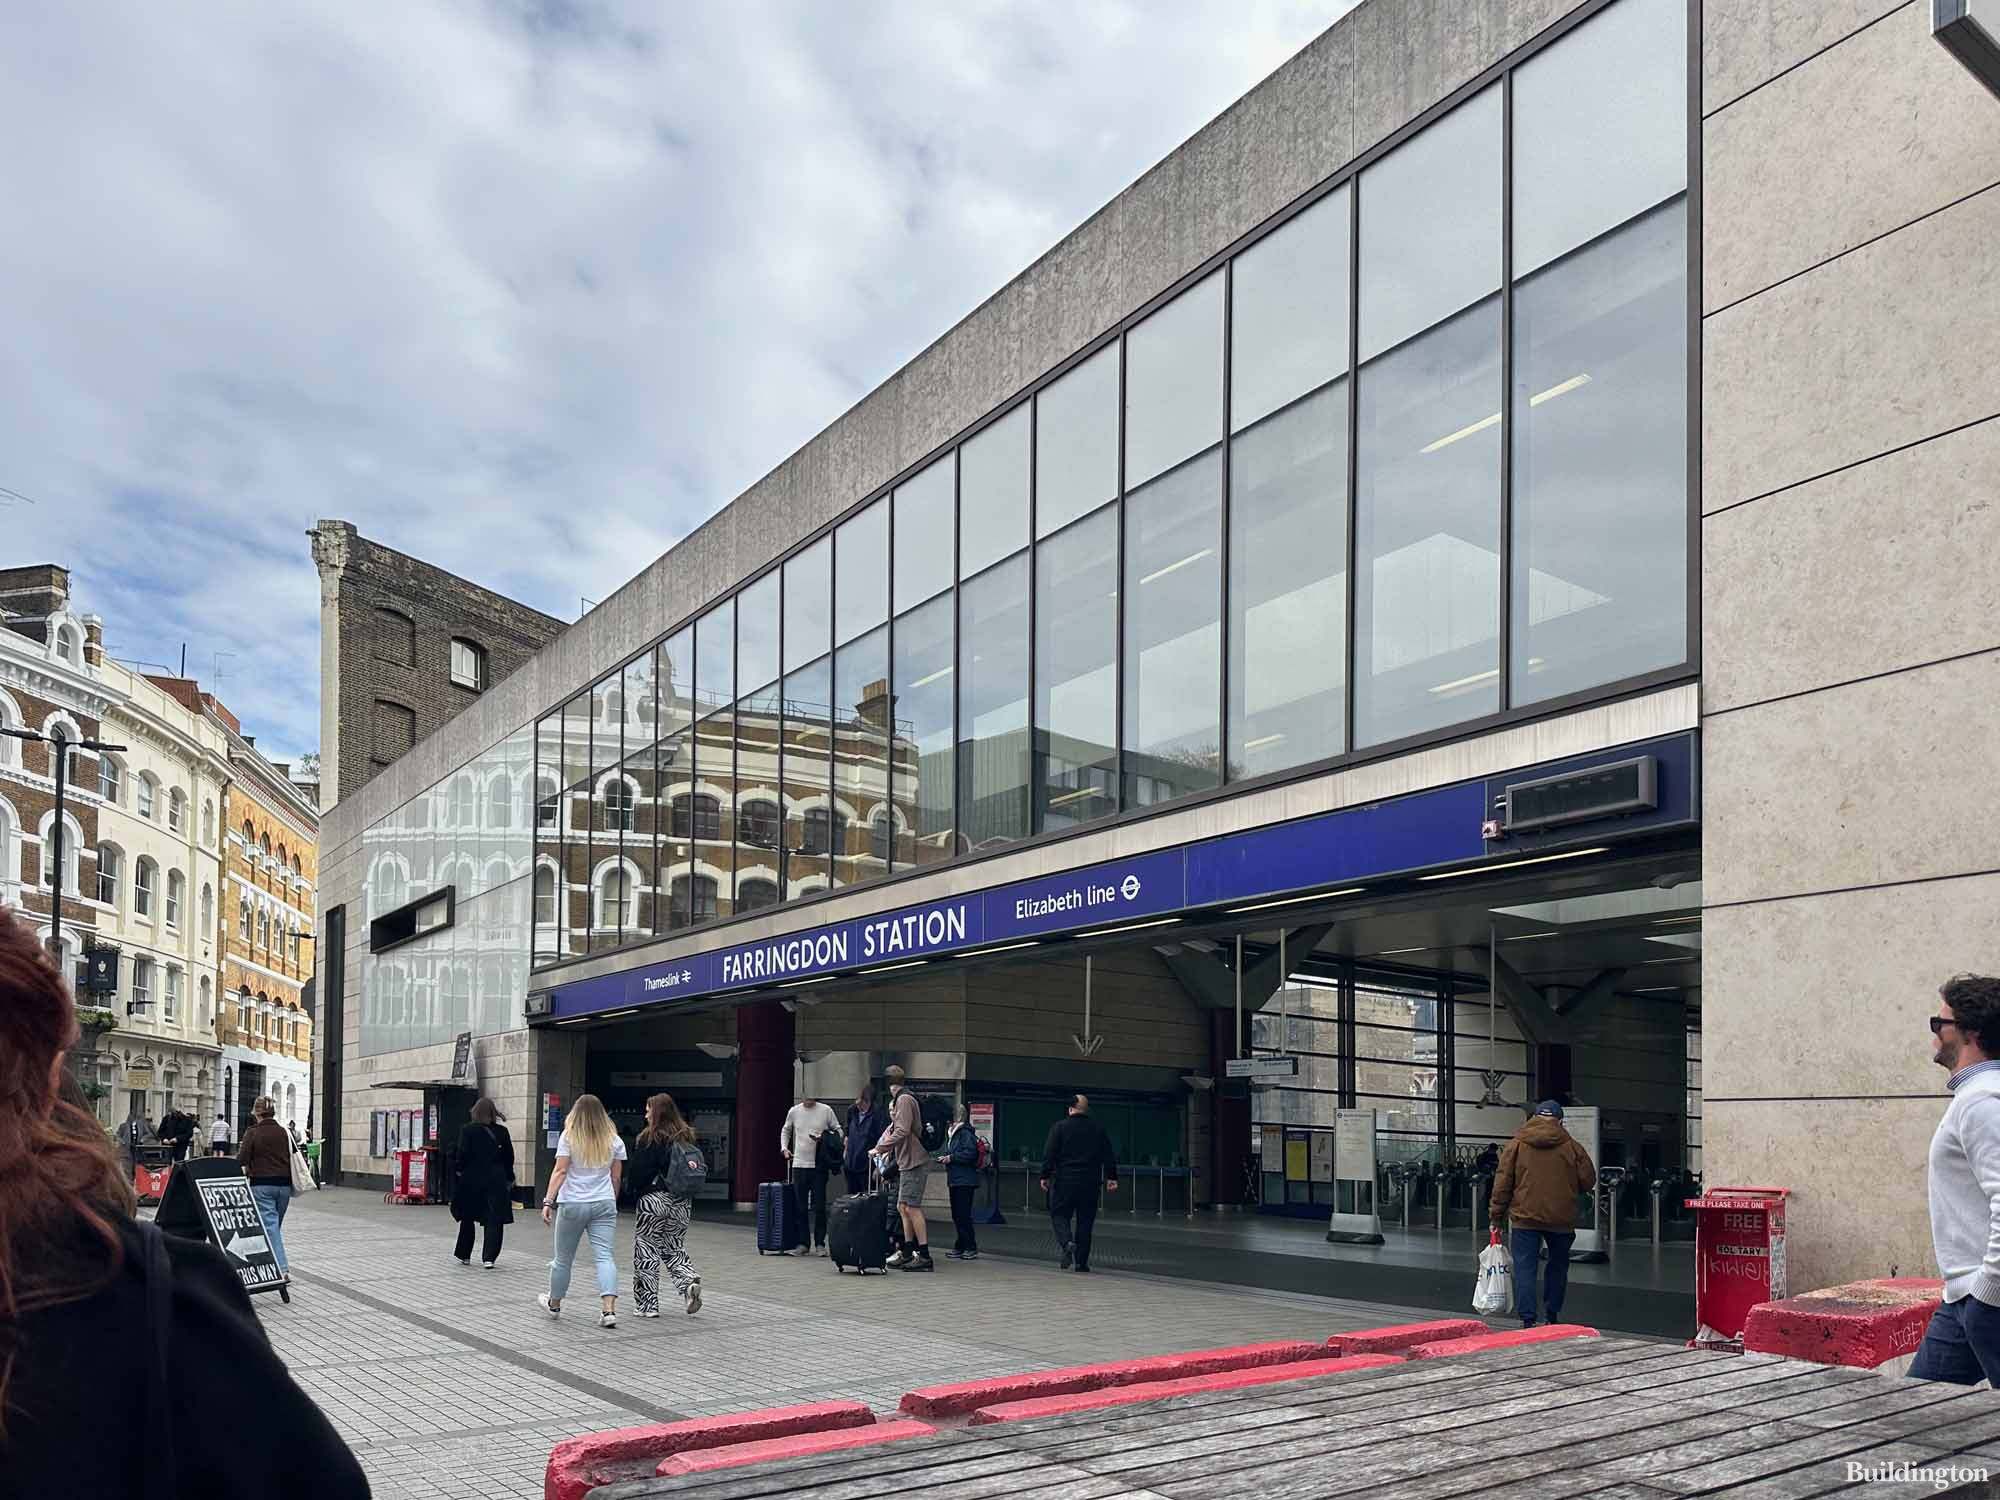 Farringdon Station building for Crossrail Elizabeth Line entrance on Cowcross Street in London